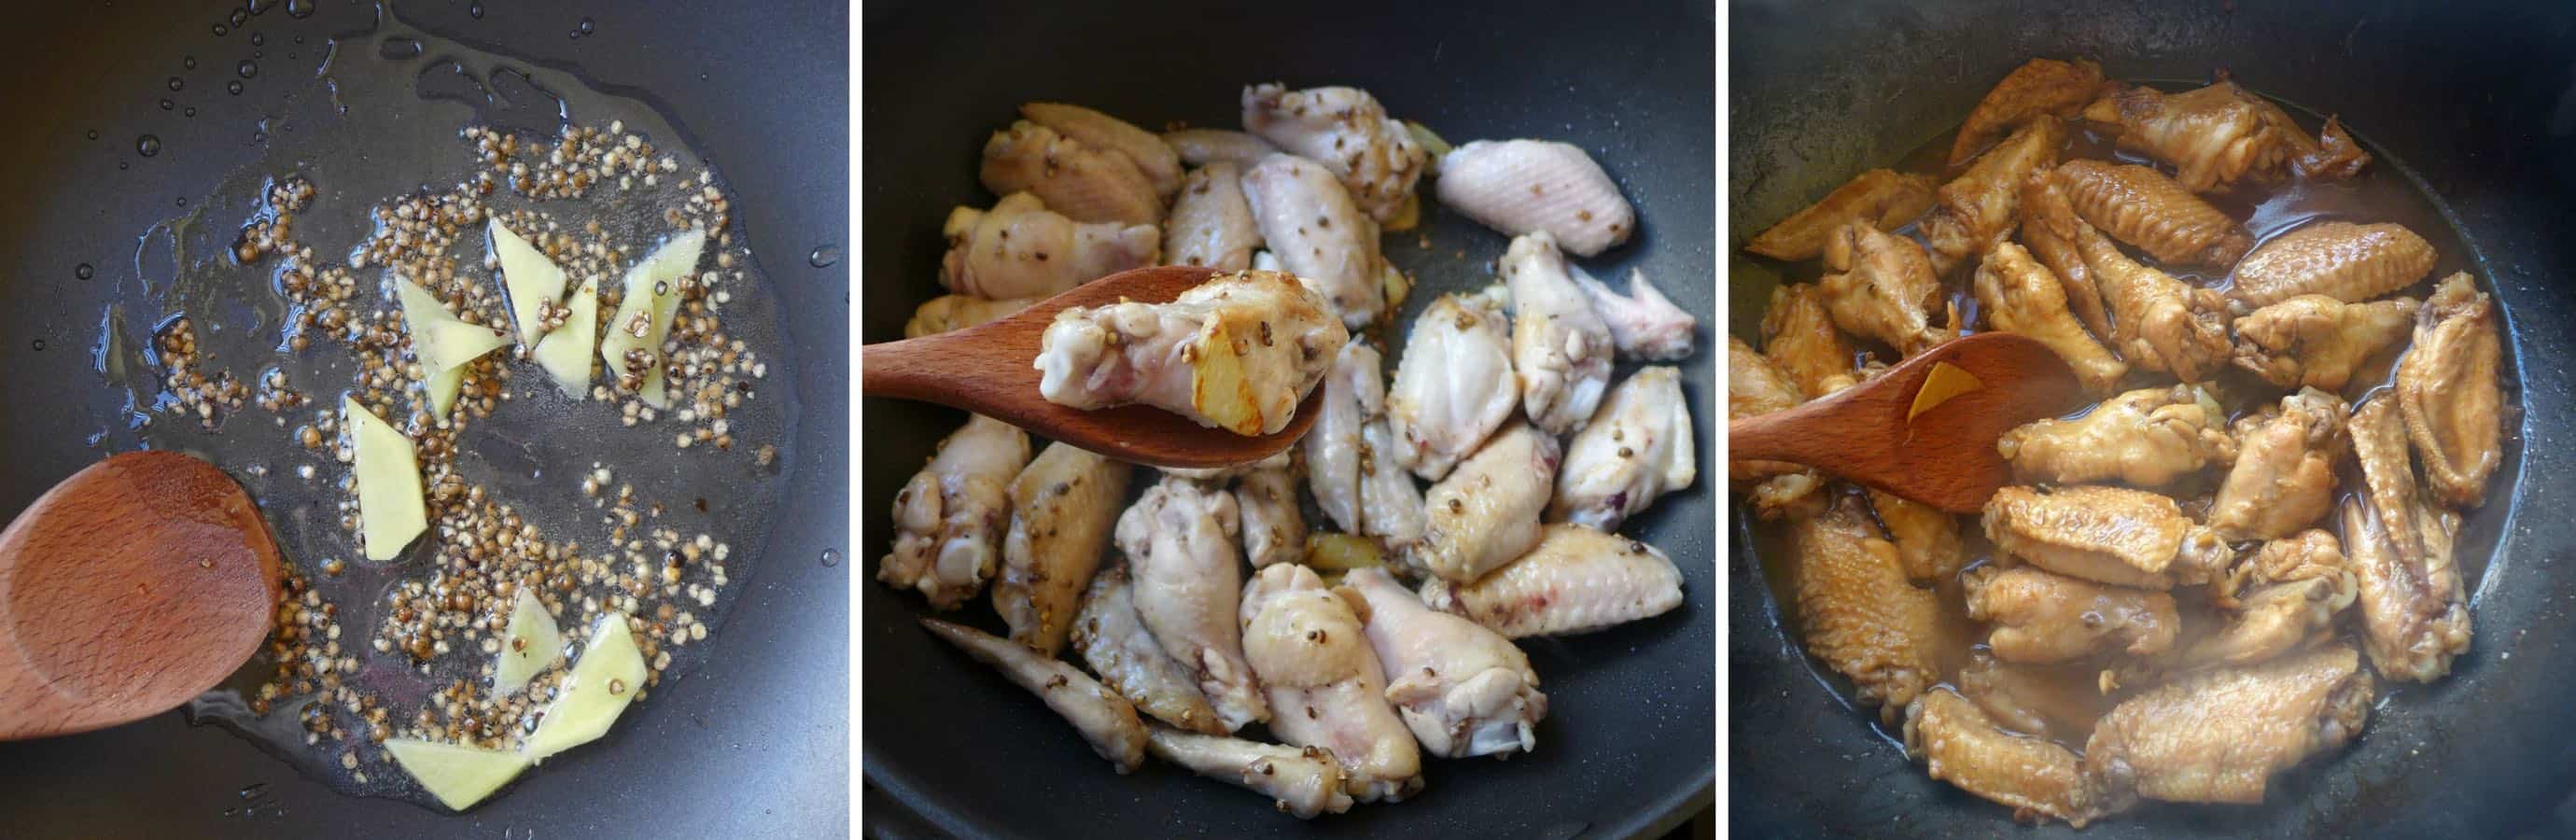 Braised chicken wings